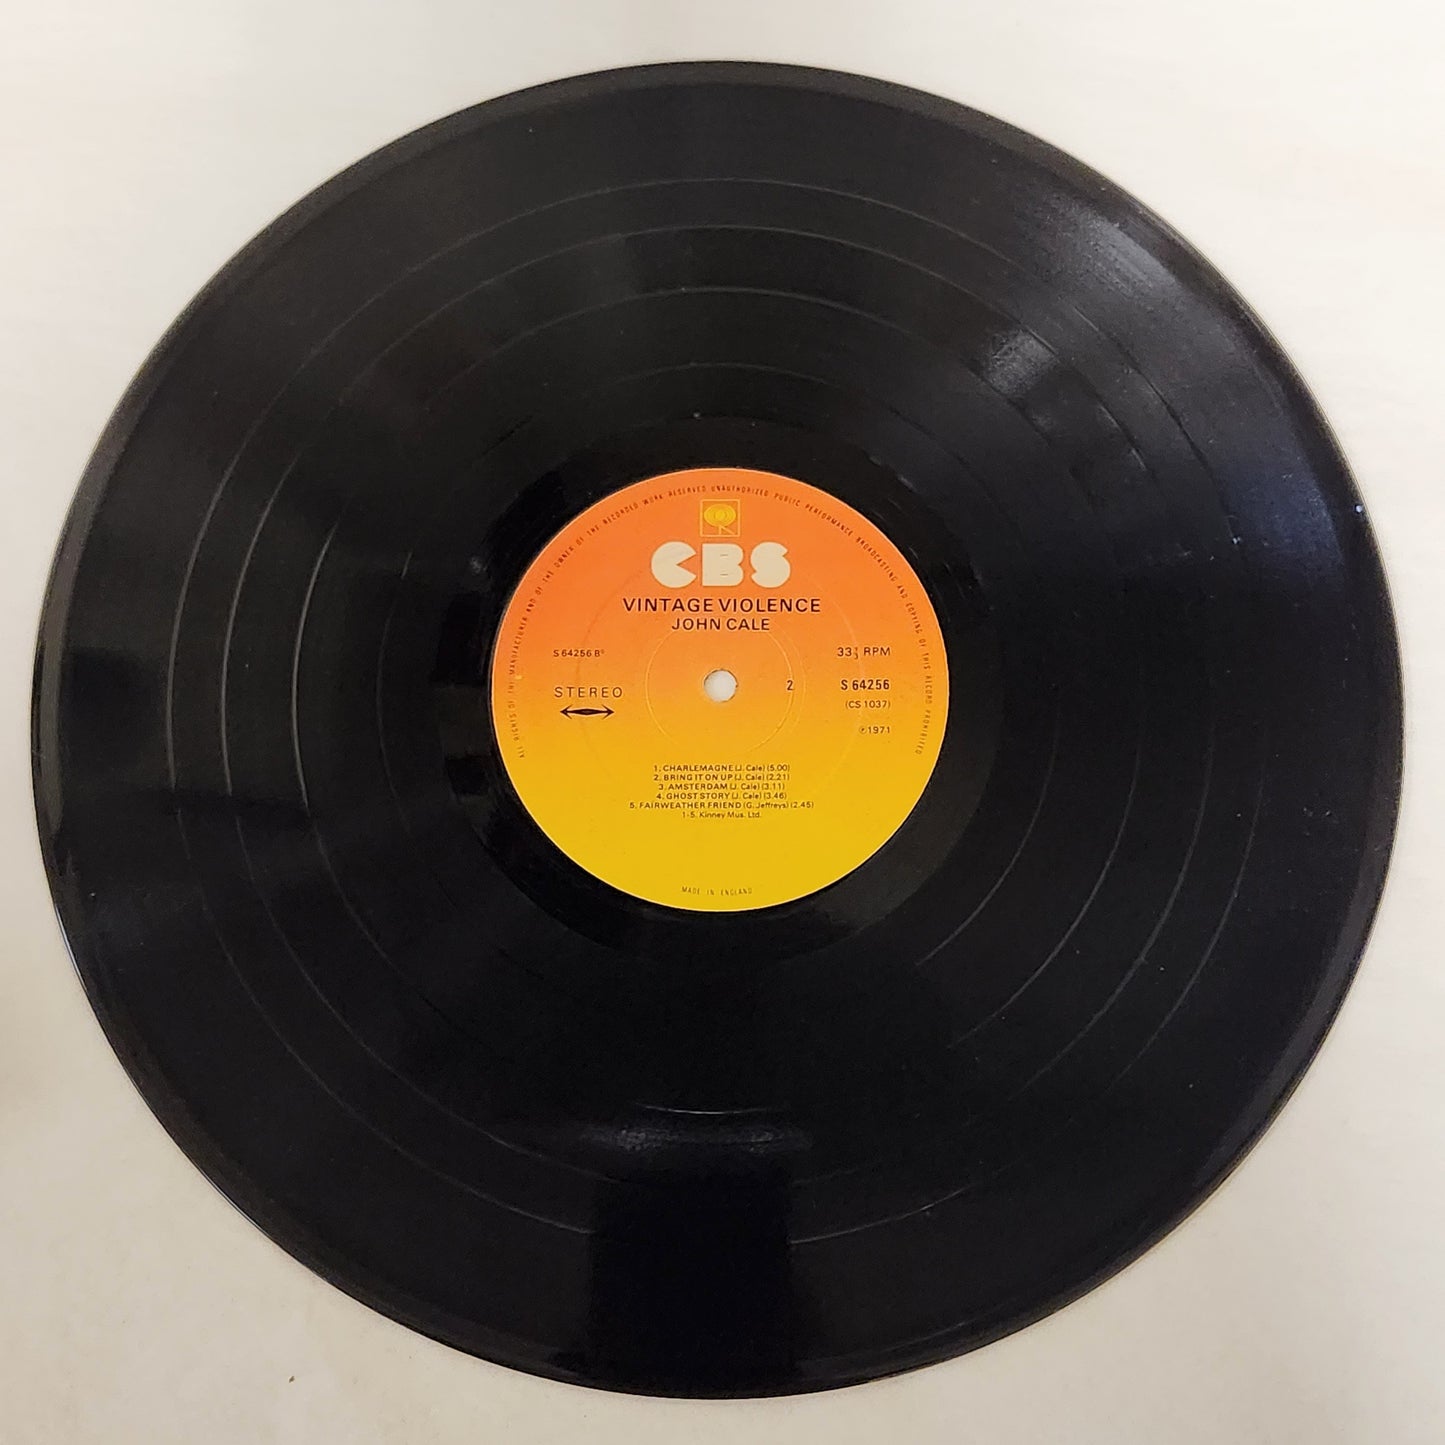 John Cale "Vintage Violence" 1974 Art Rock Record Album